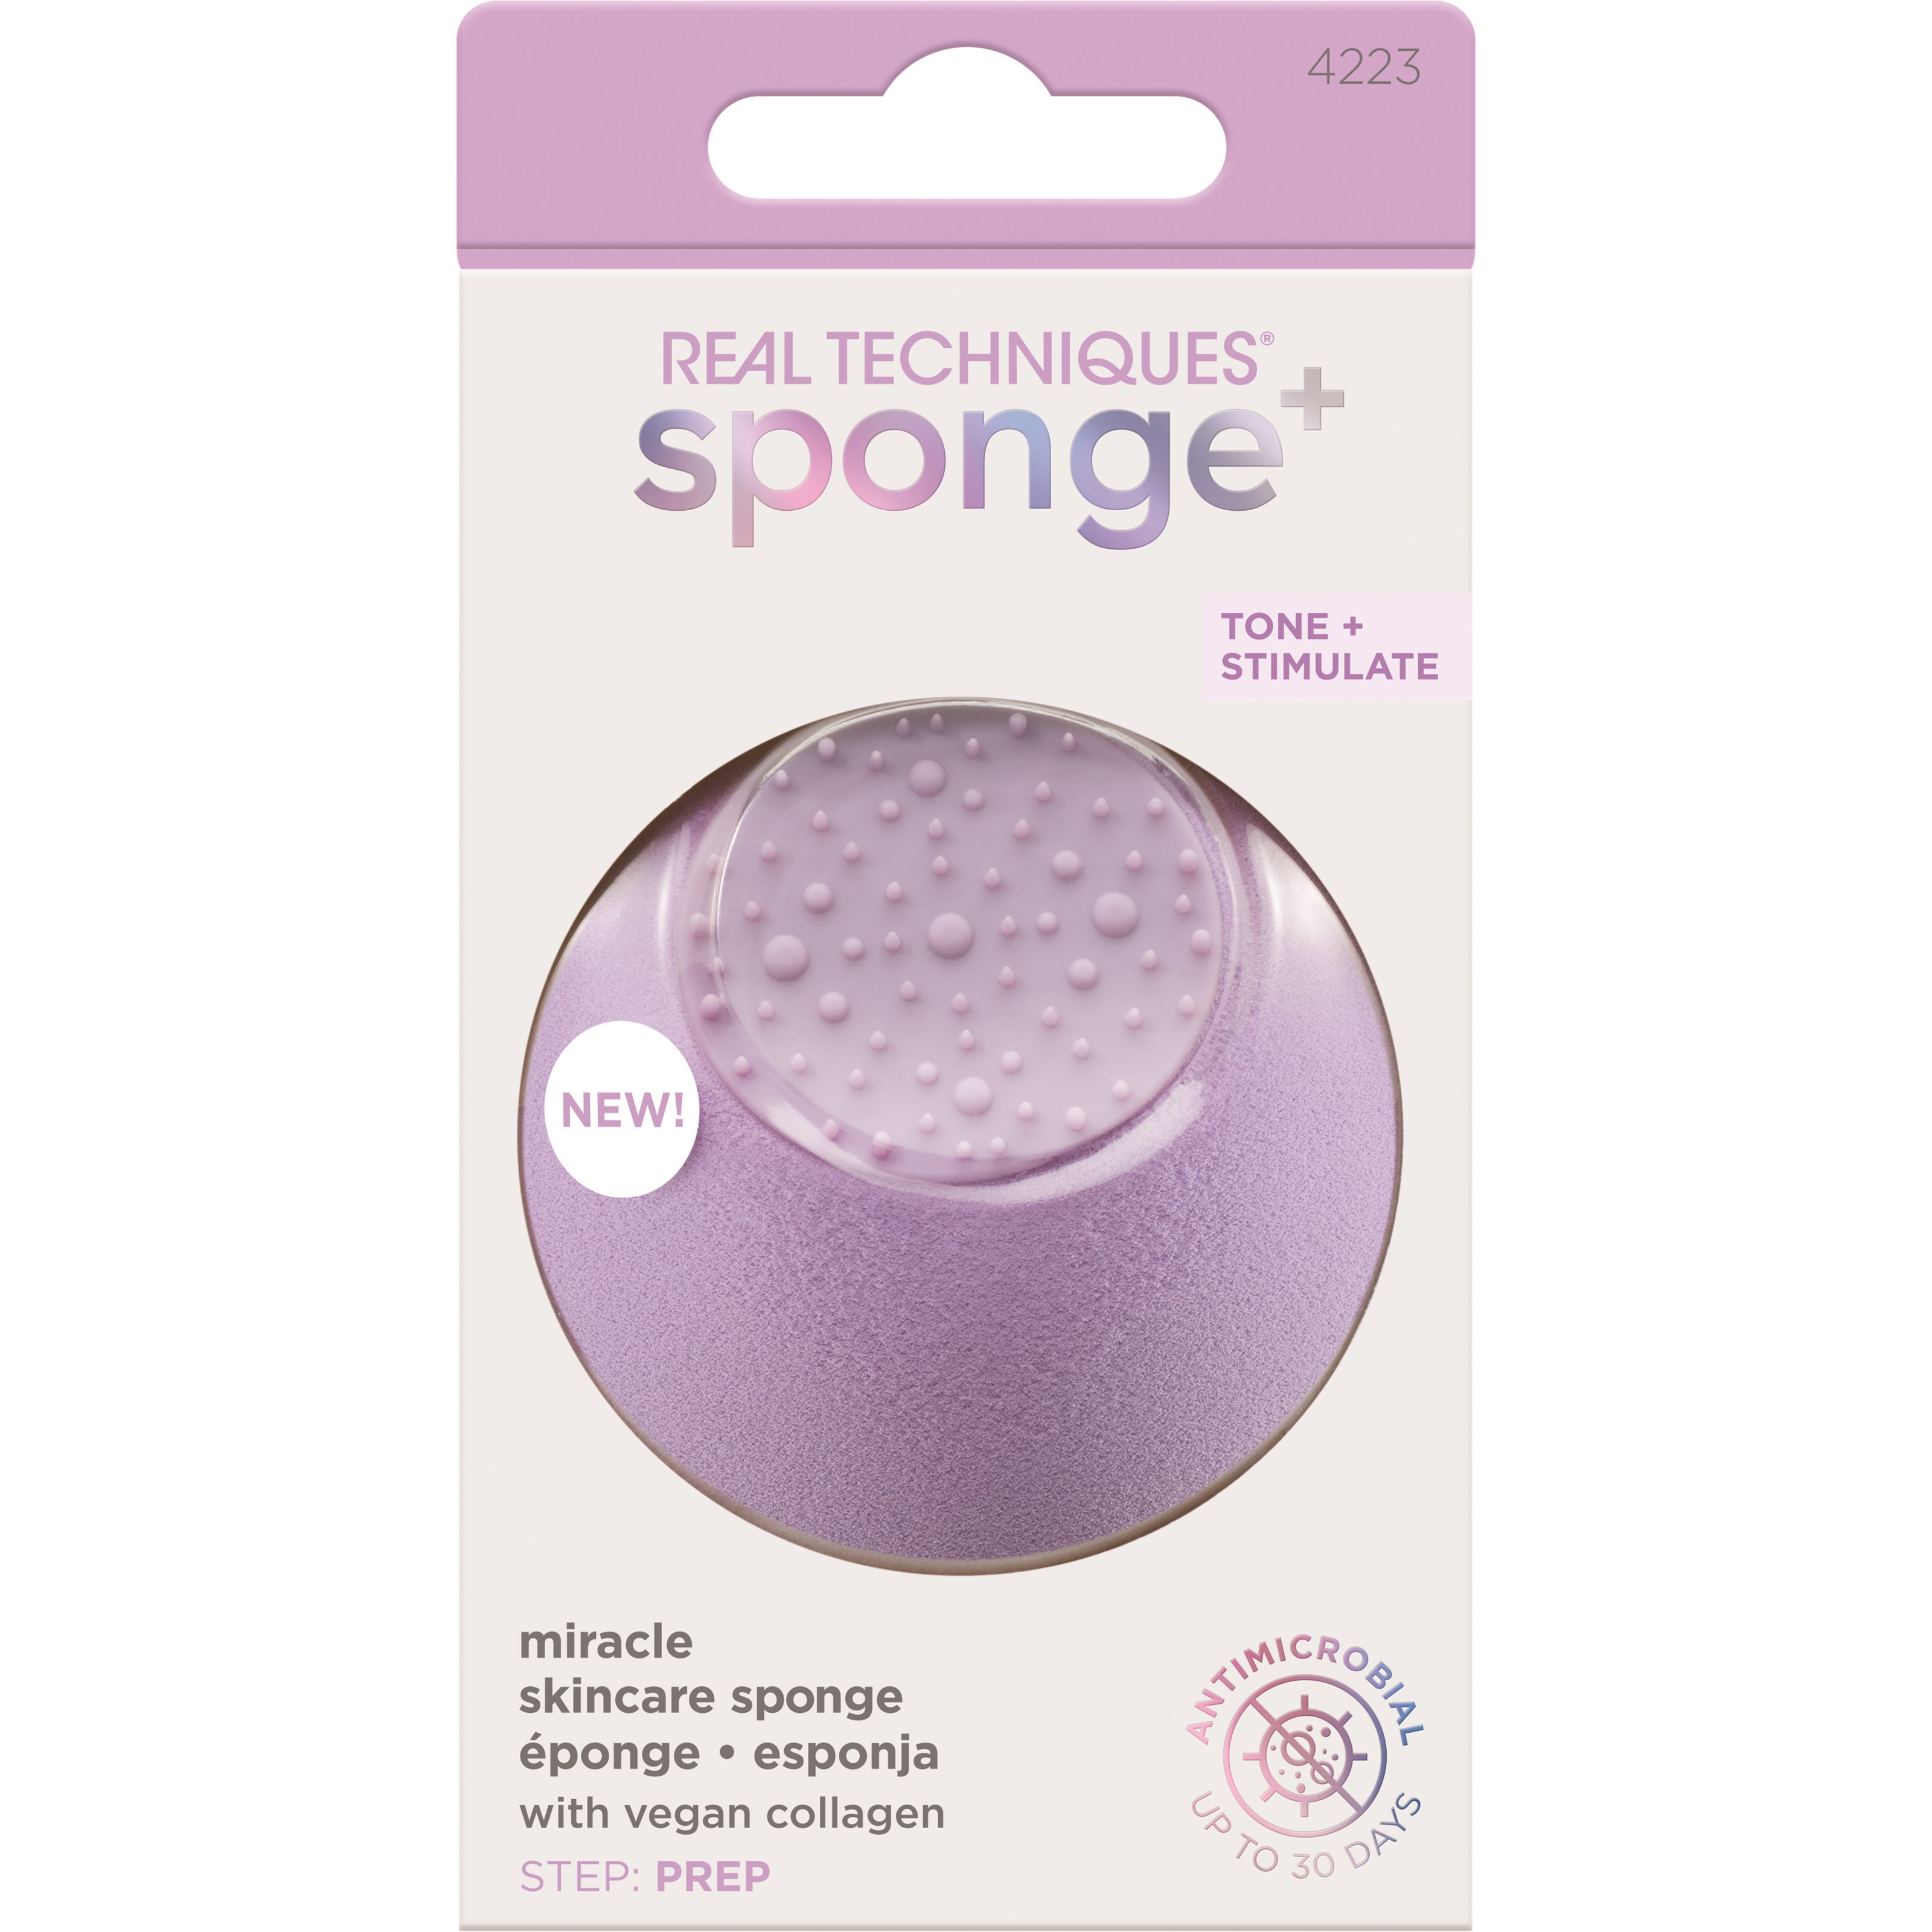 Real Techniques Sponge+  Miracle Skin Sponge